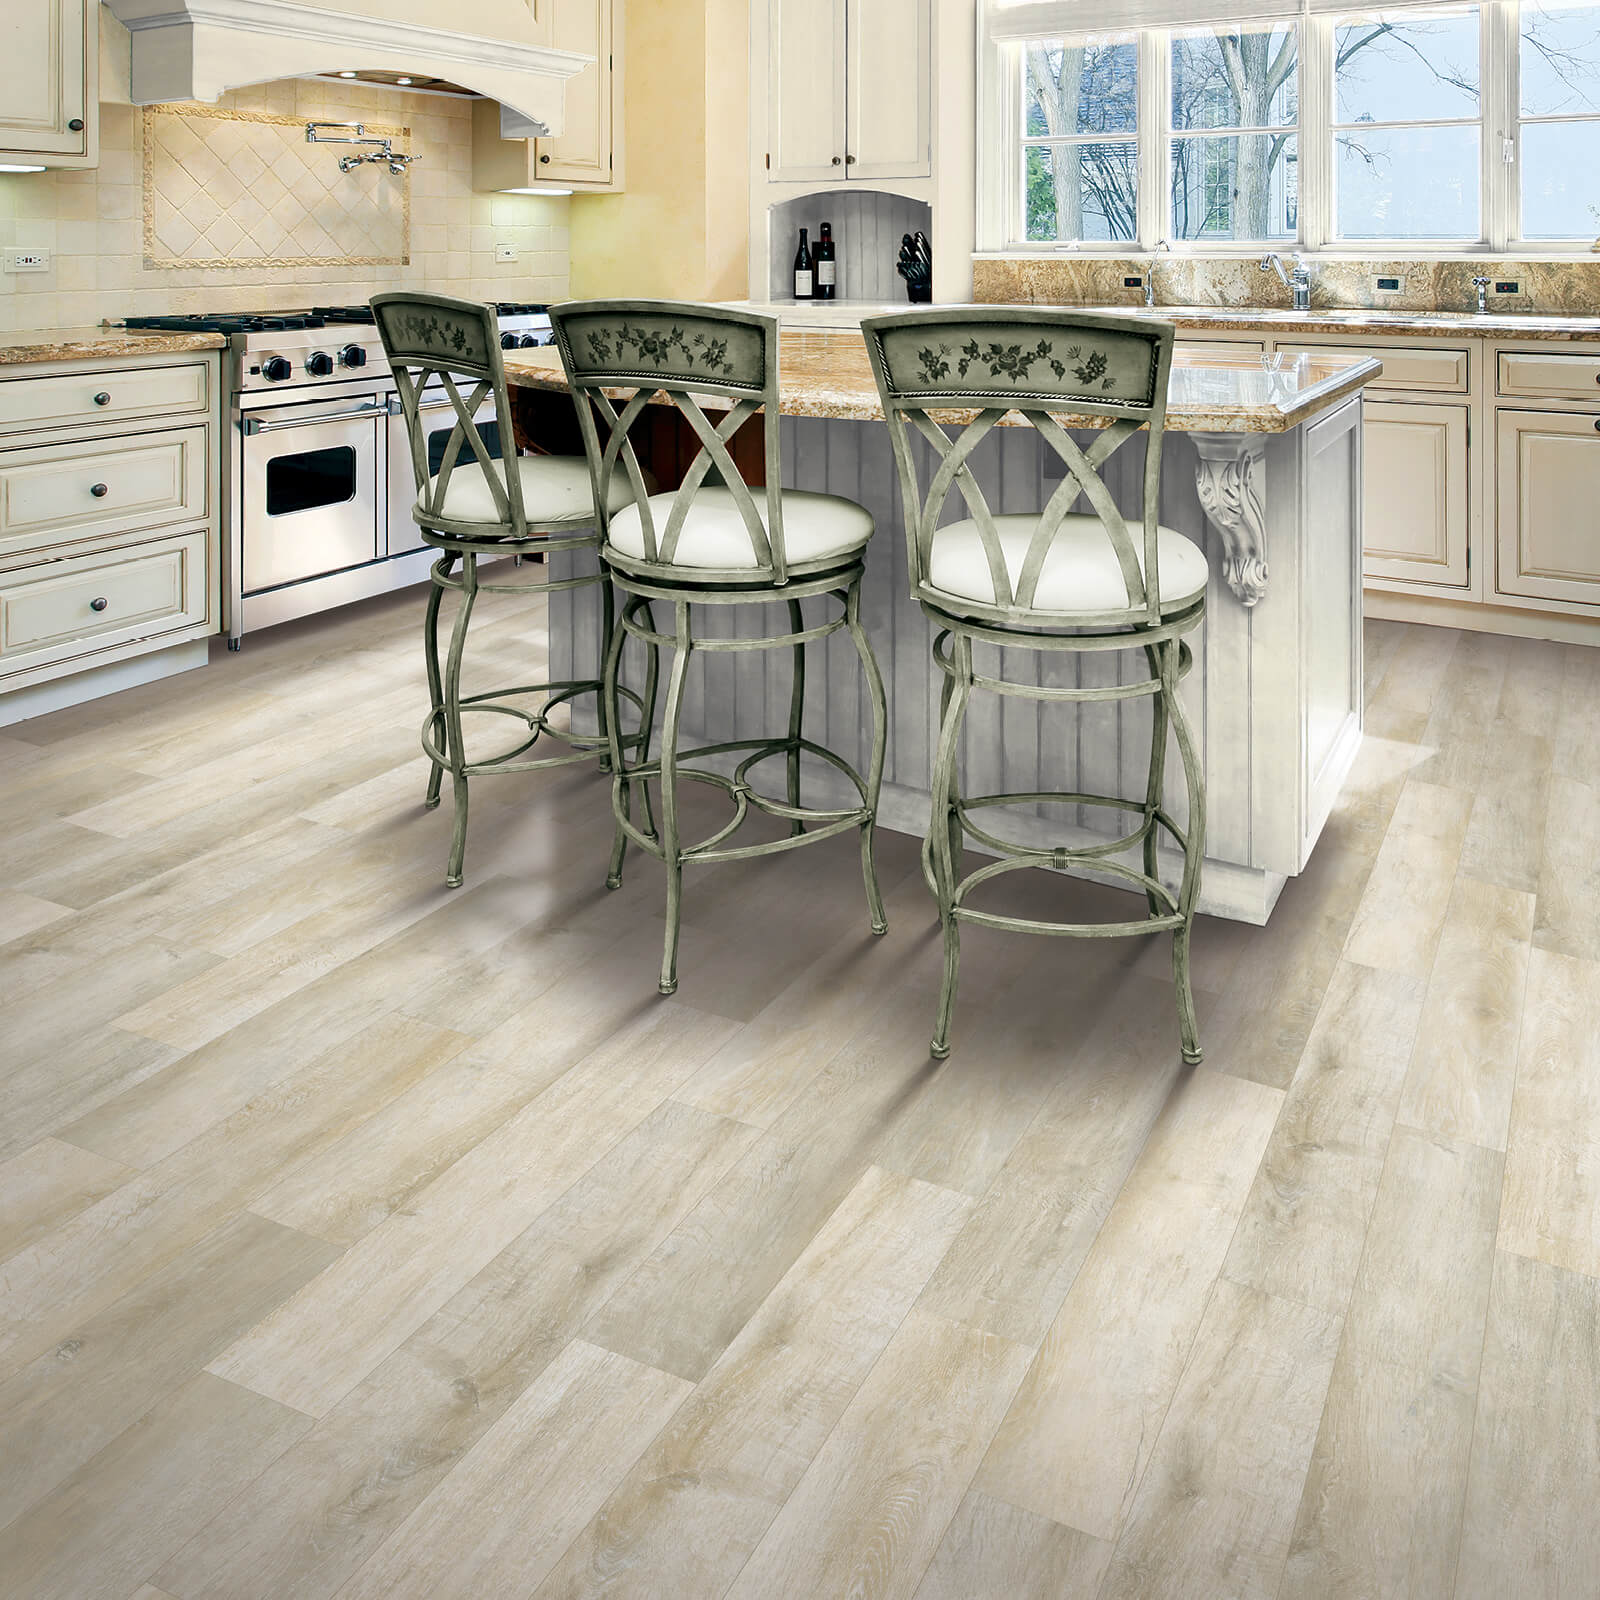 Hardwood in kitchen | Sterling Carpet and Flooring